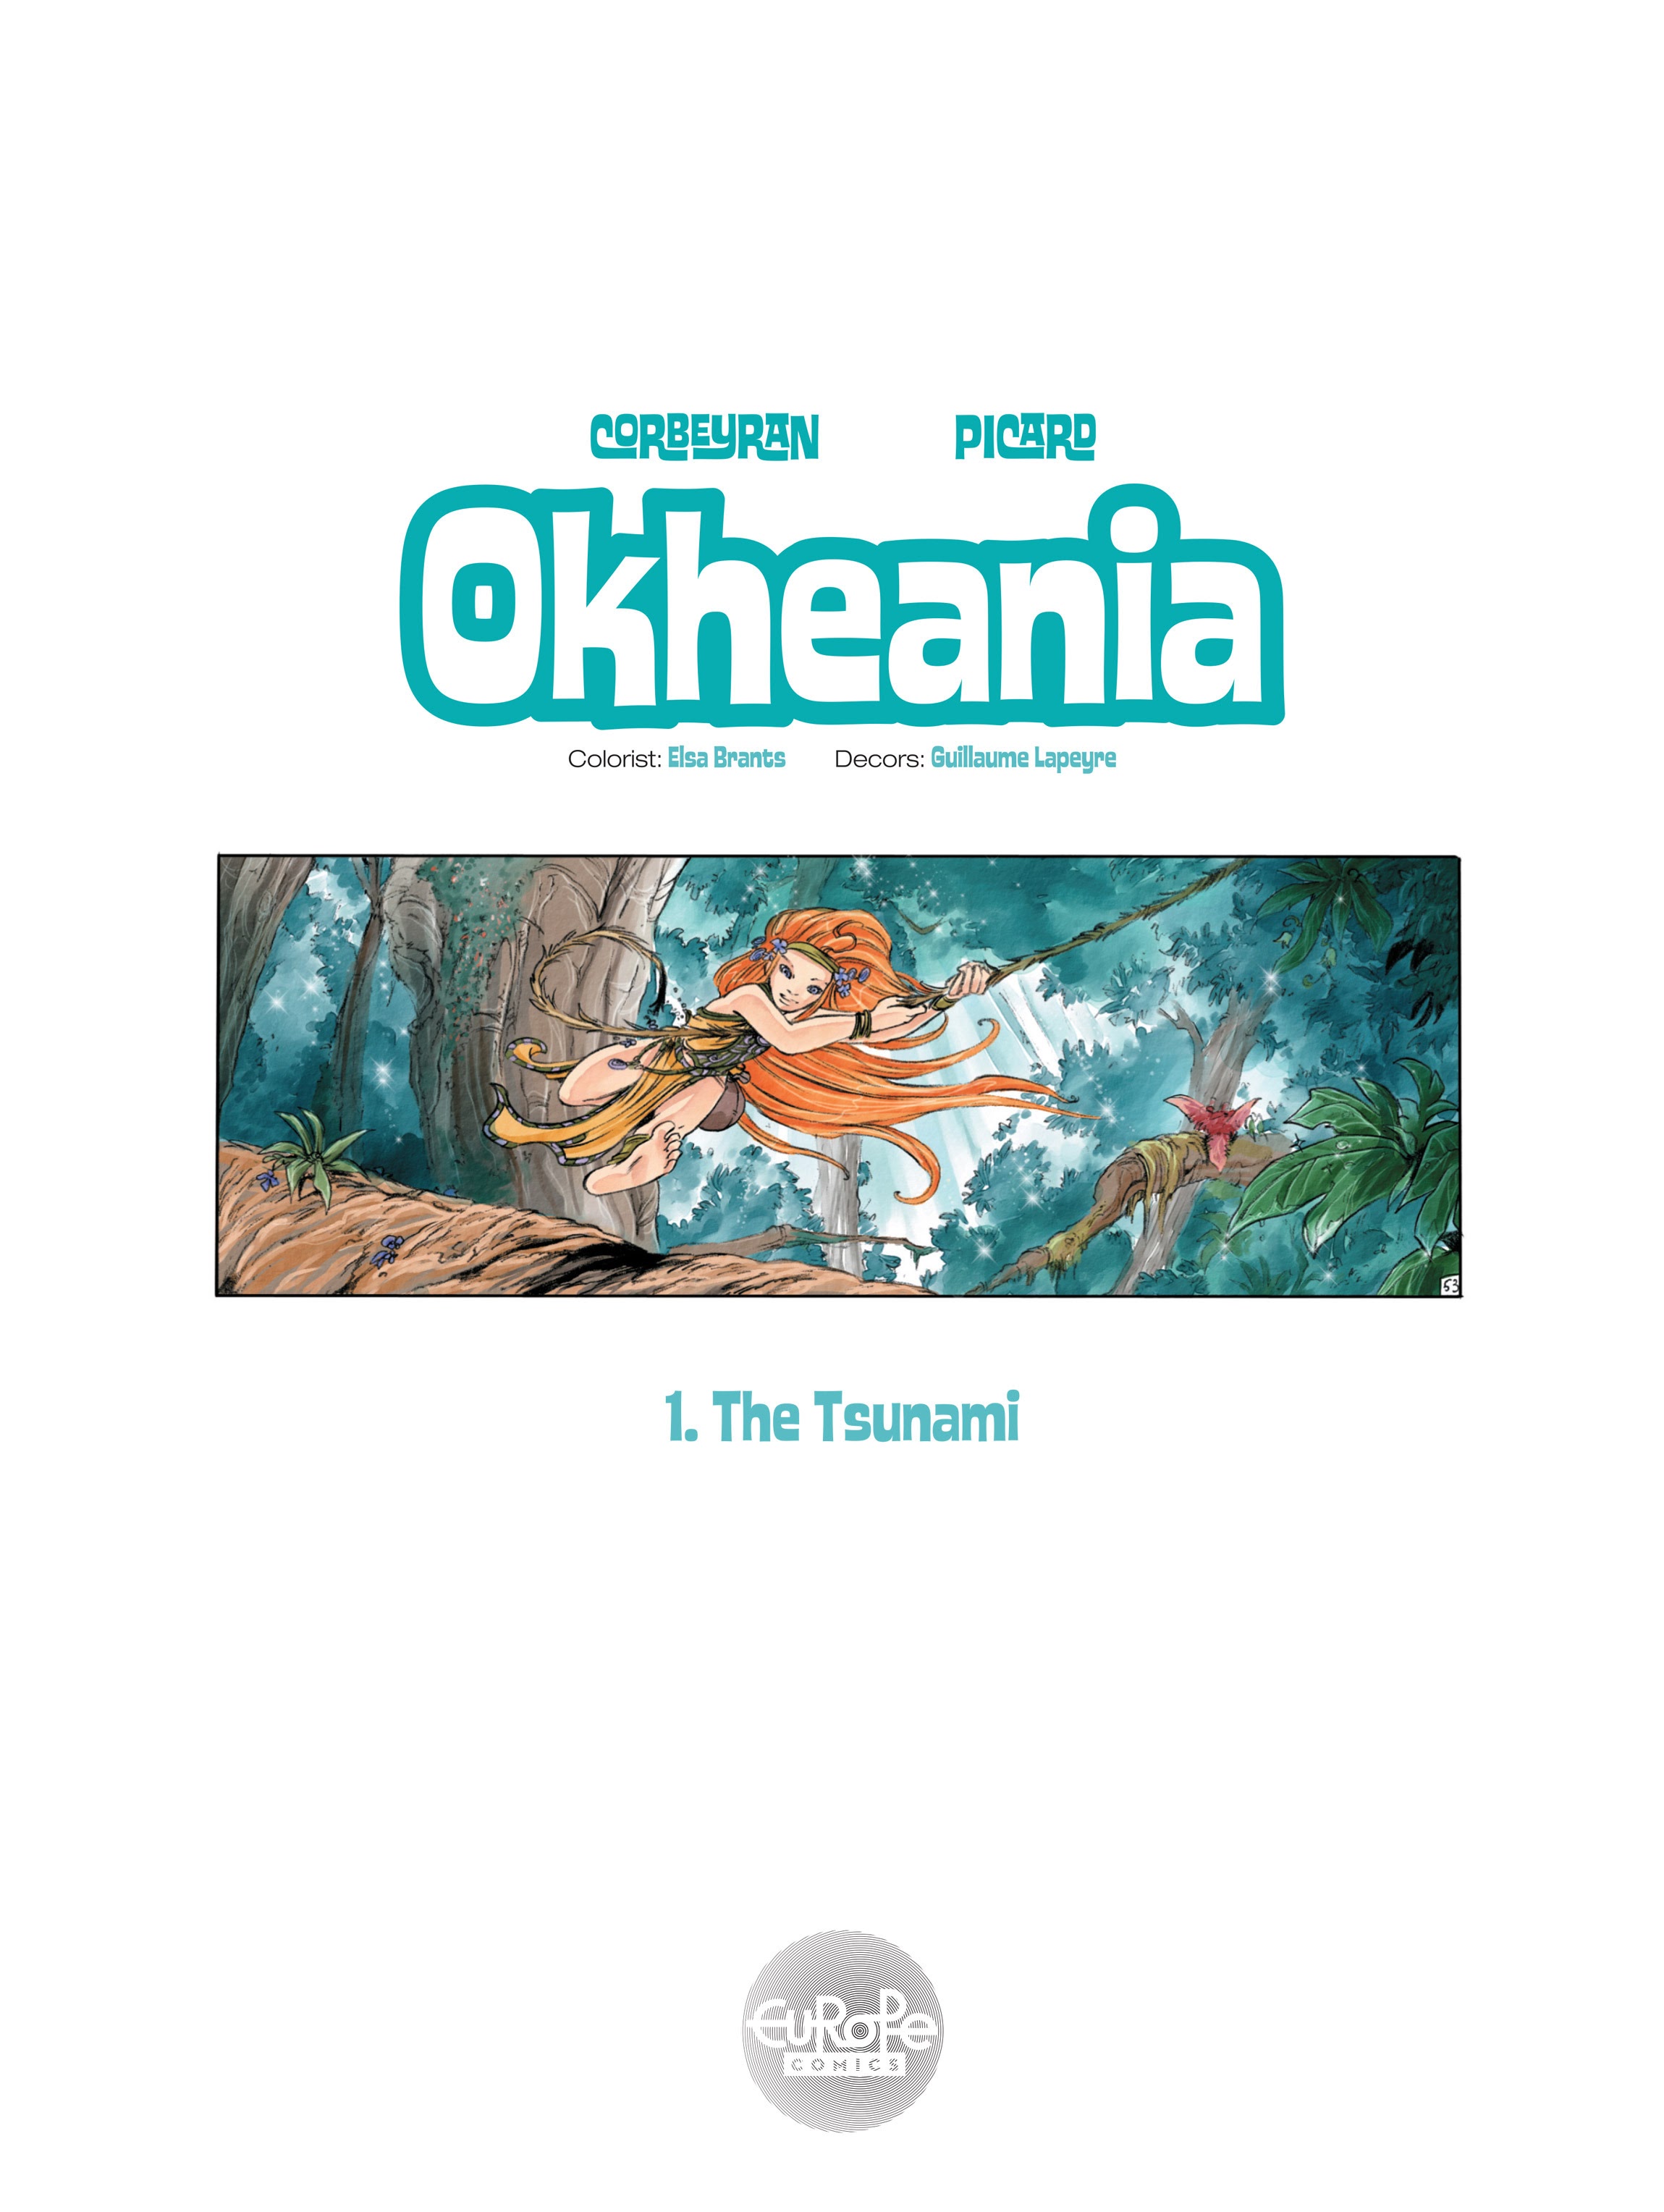 Read online Okheania comic -  Issue #1 - 3